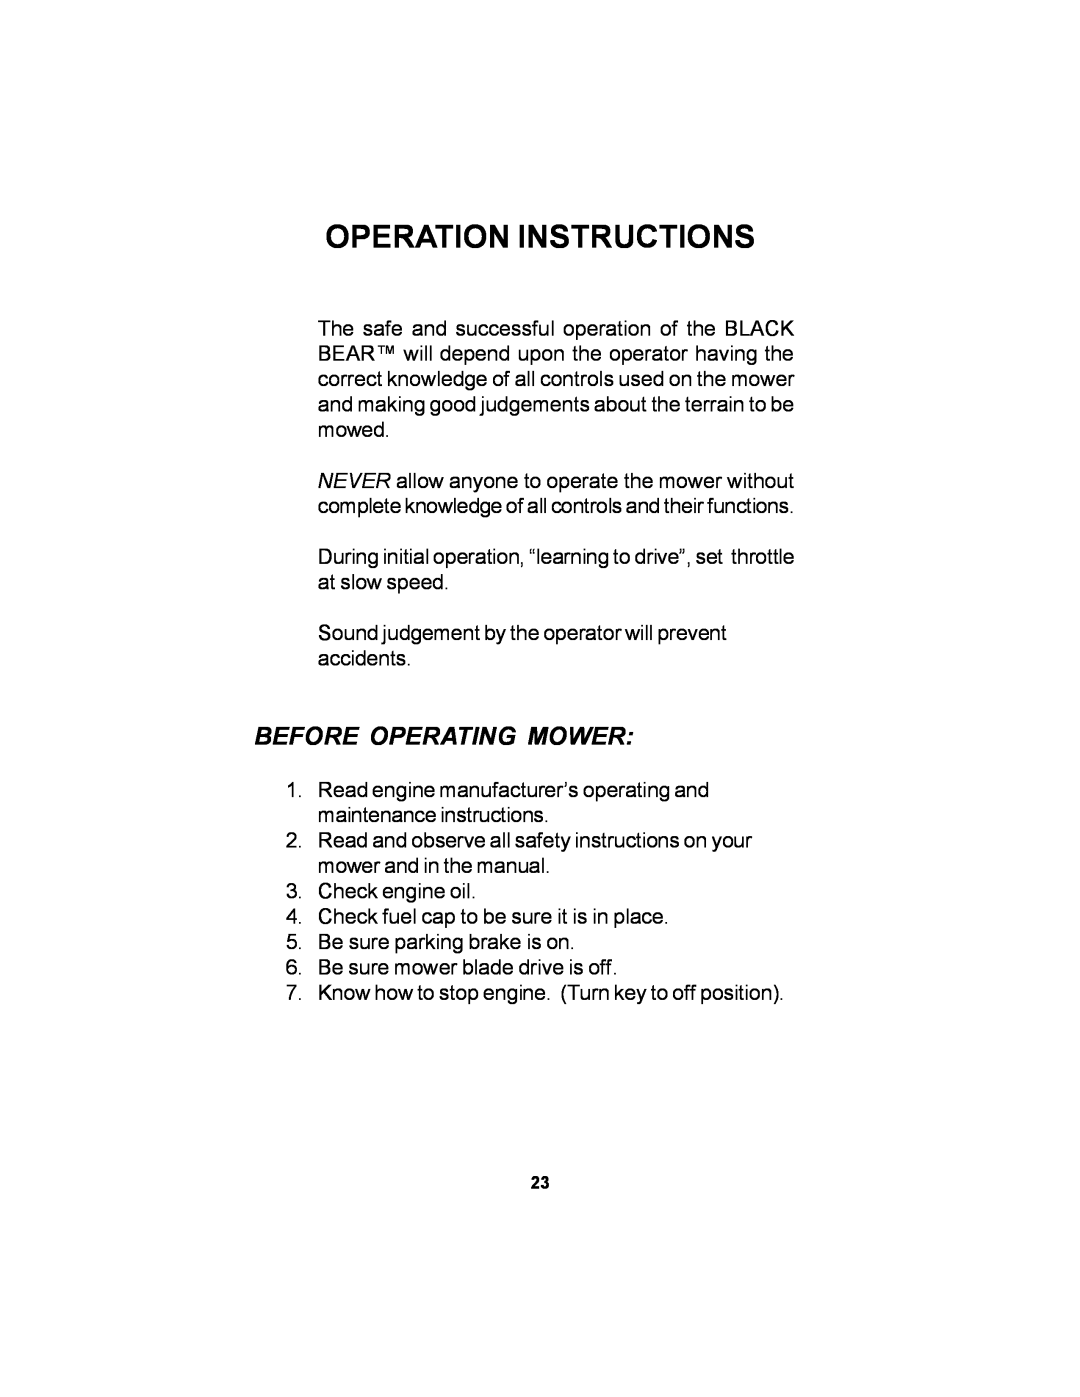 Dixon Black Bear manual Operation Instructions, Before Operating Mower 